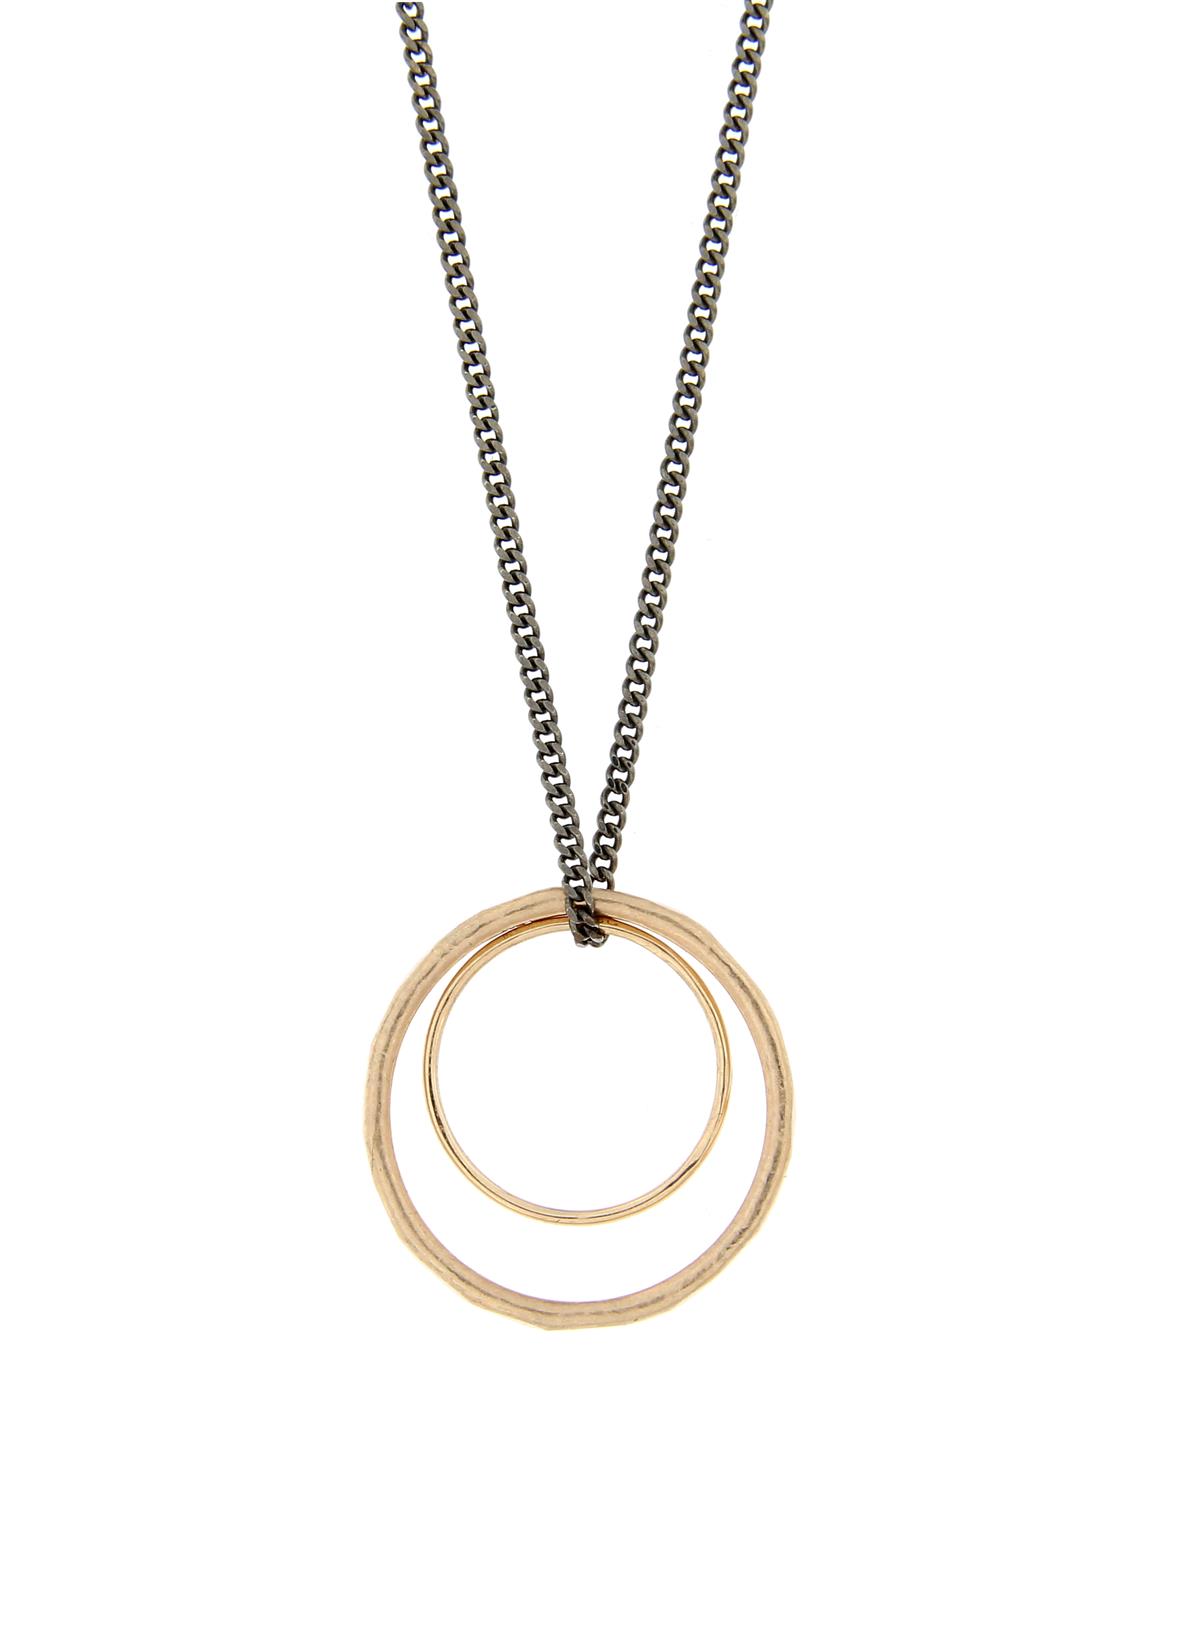 Katie g. Jewellery - Knuckle Ring + Mini Ring Pendant - 14kt. Roségold - auf schwarzer Panzerkette